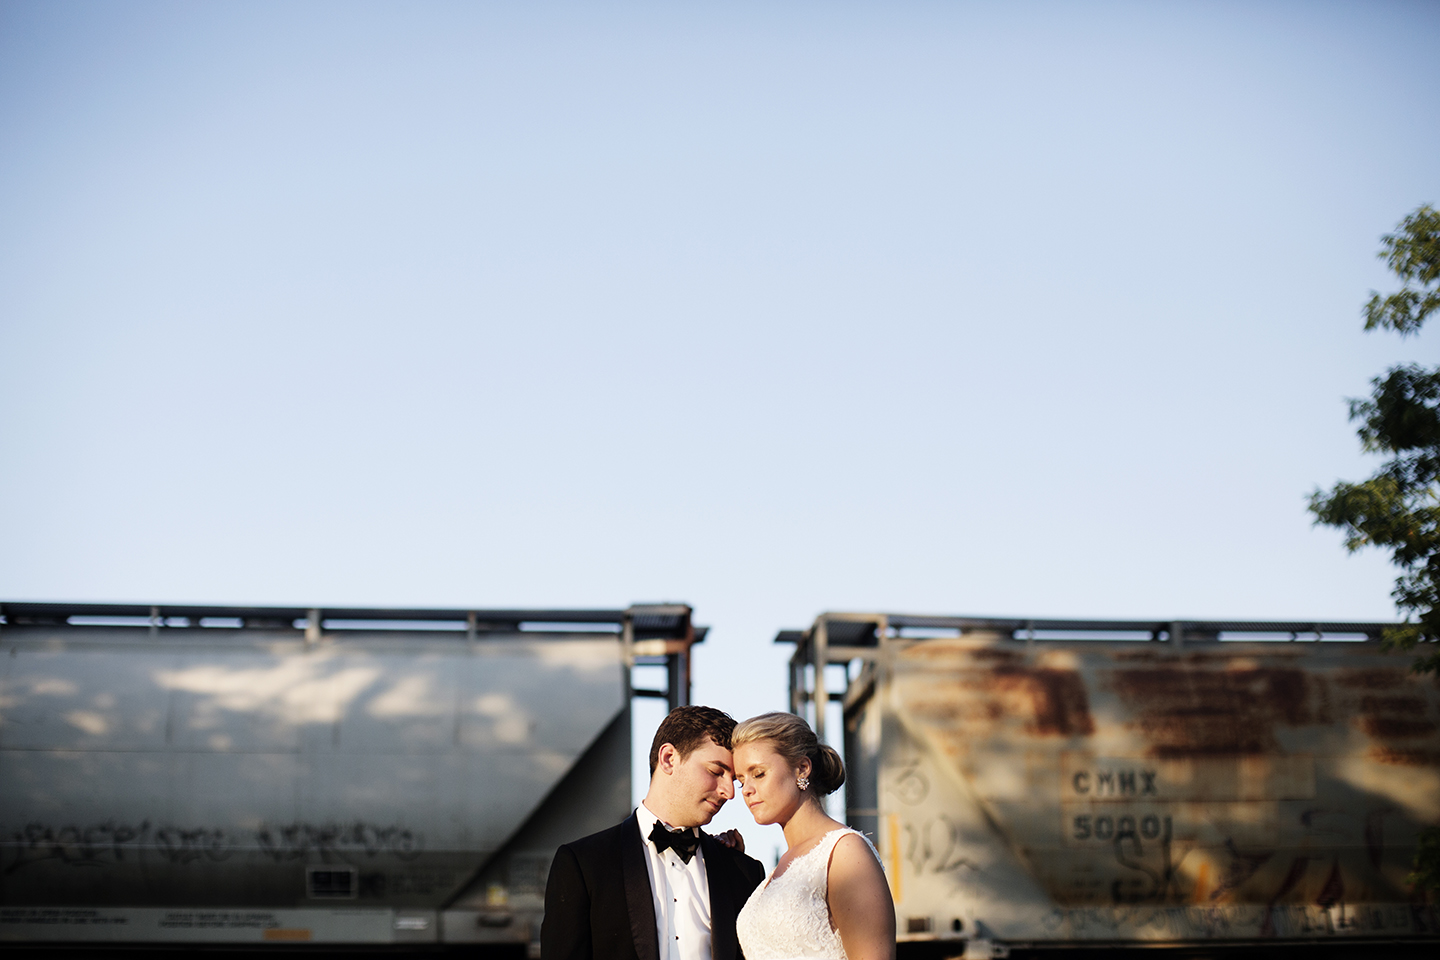 Solar Arts by Chowgirls | MN Wedding Photographer | Photogen Inc. | Eliesa Johnson | Based in Minneapolis